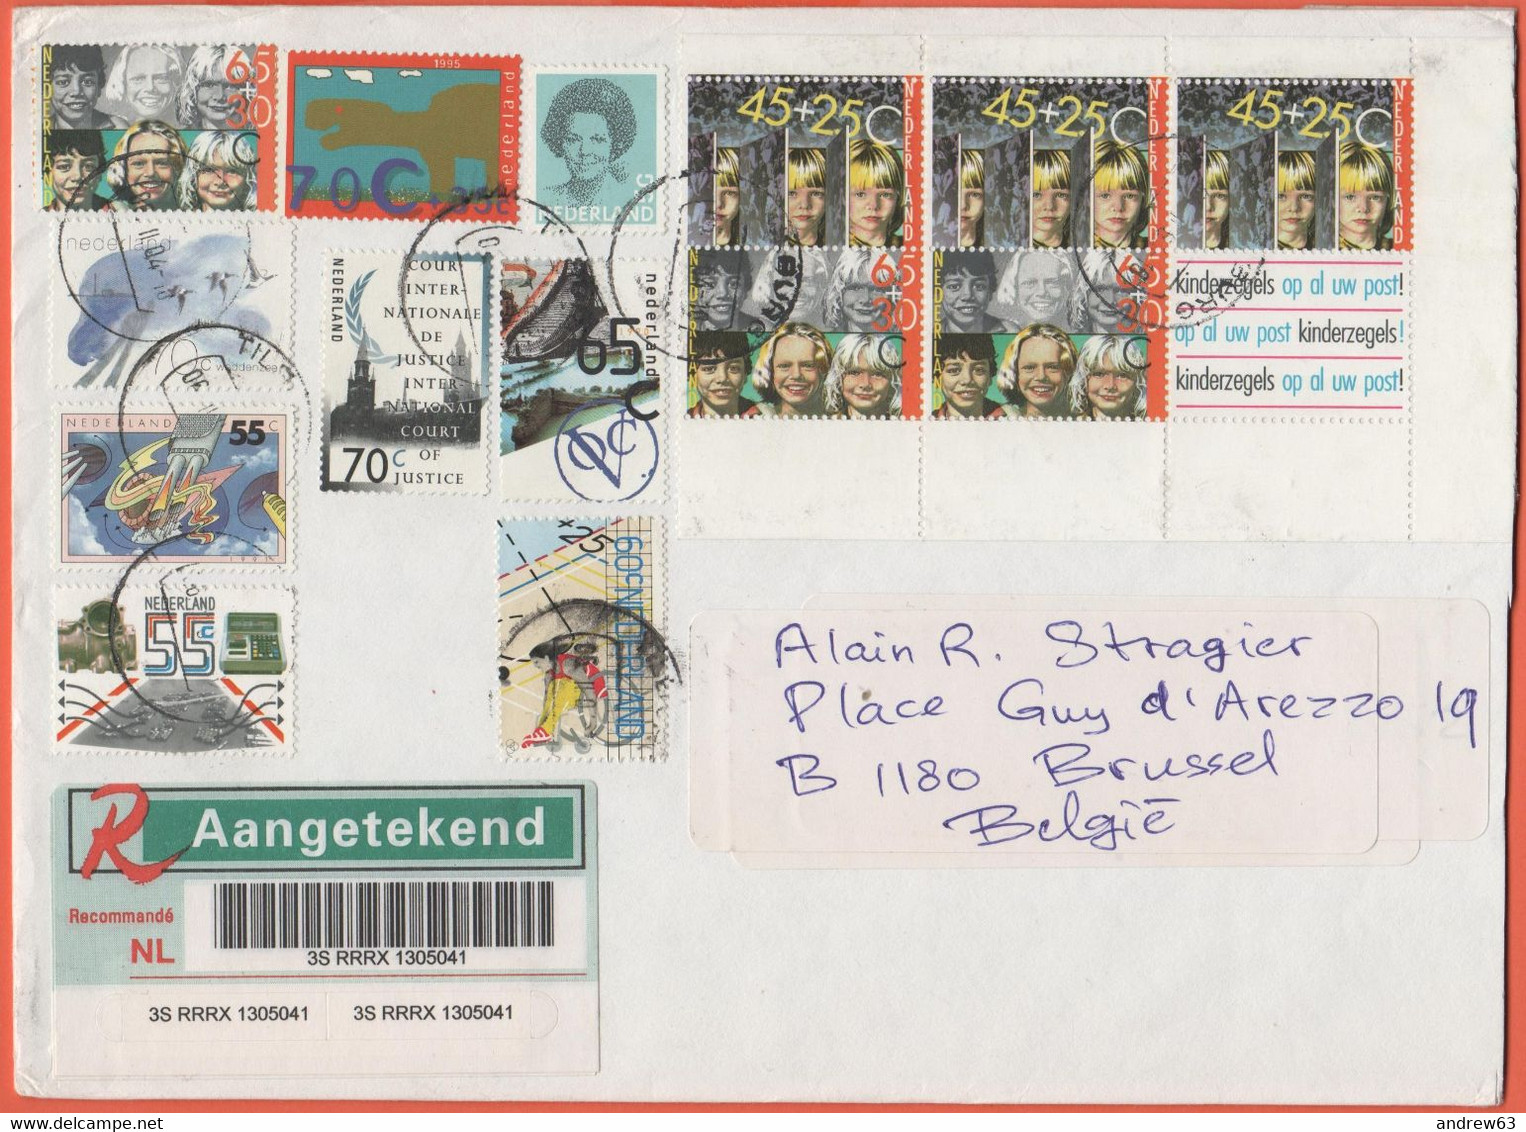 OLANDA - NEDERLAND - Paesi Bassi - 2004 - 14 Stamps - Medium Envelope - Registered - Viaggiata Da Tilburg Per Brussels, - Brieven En Documenten